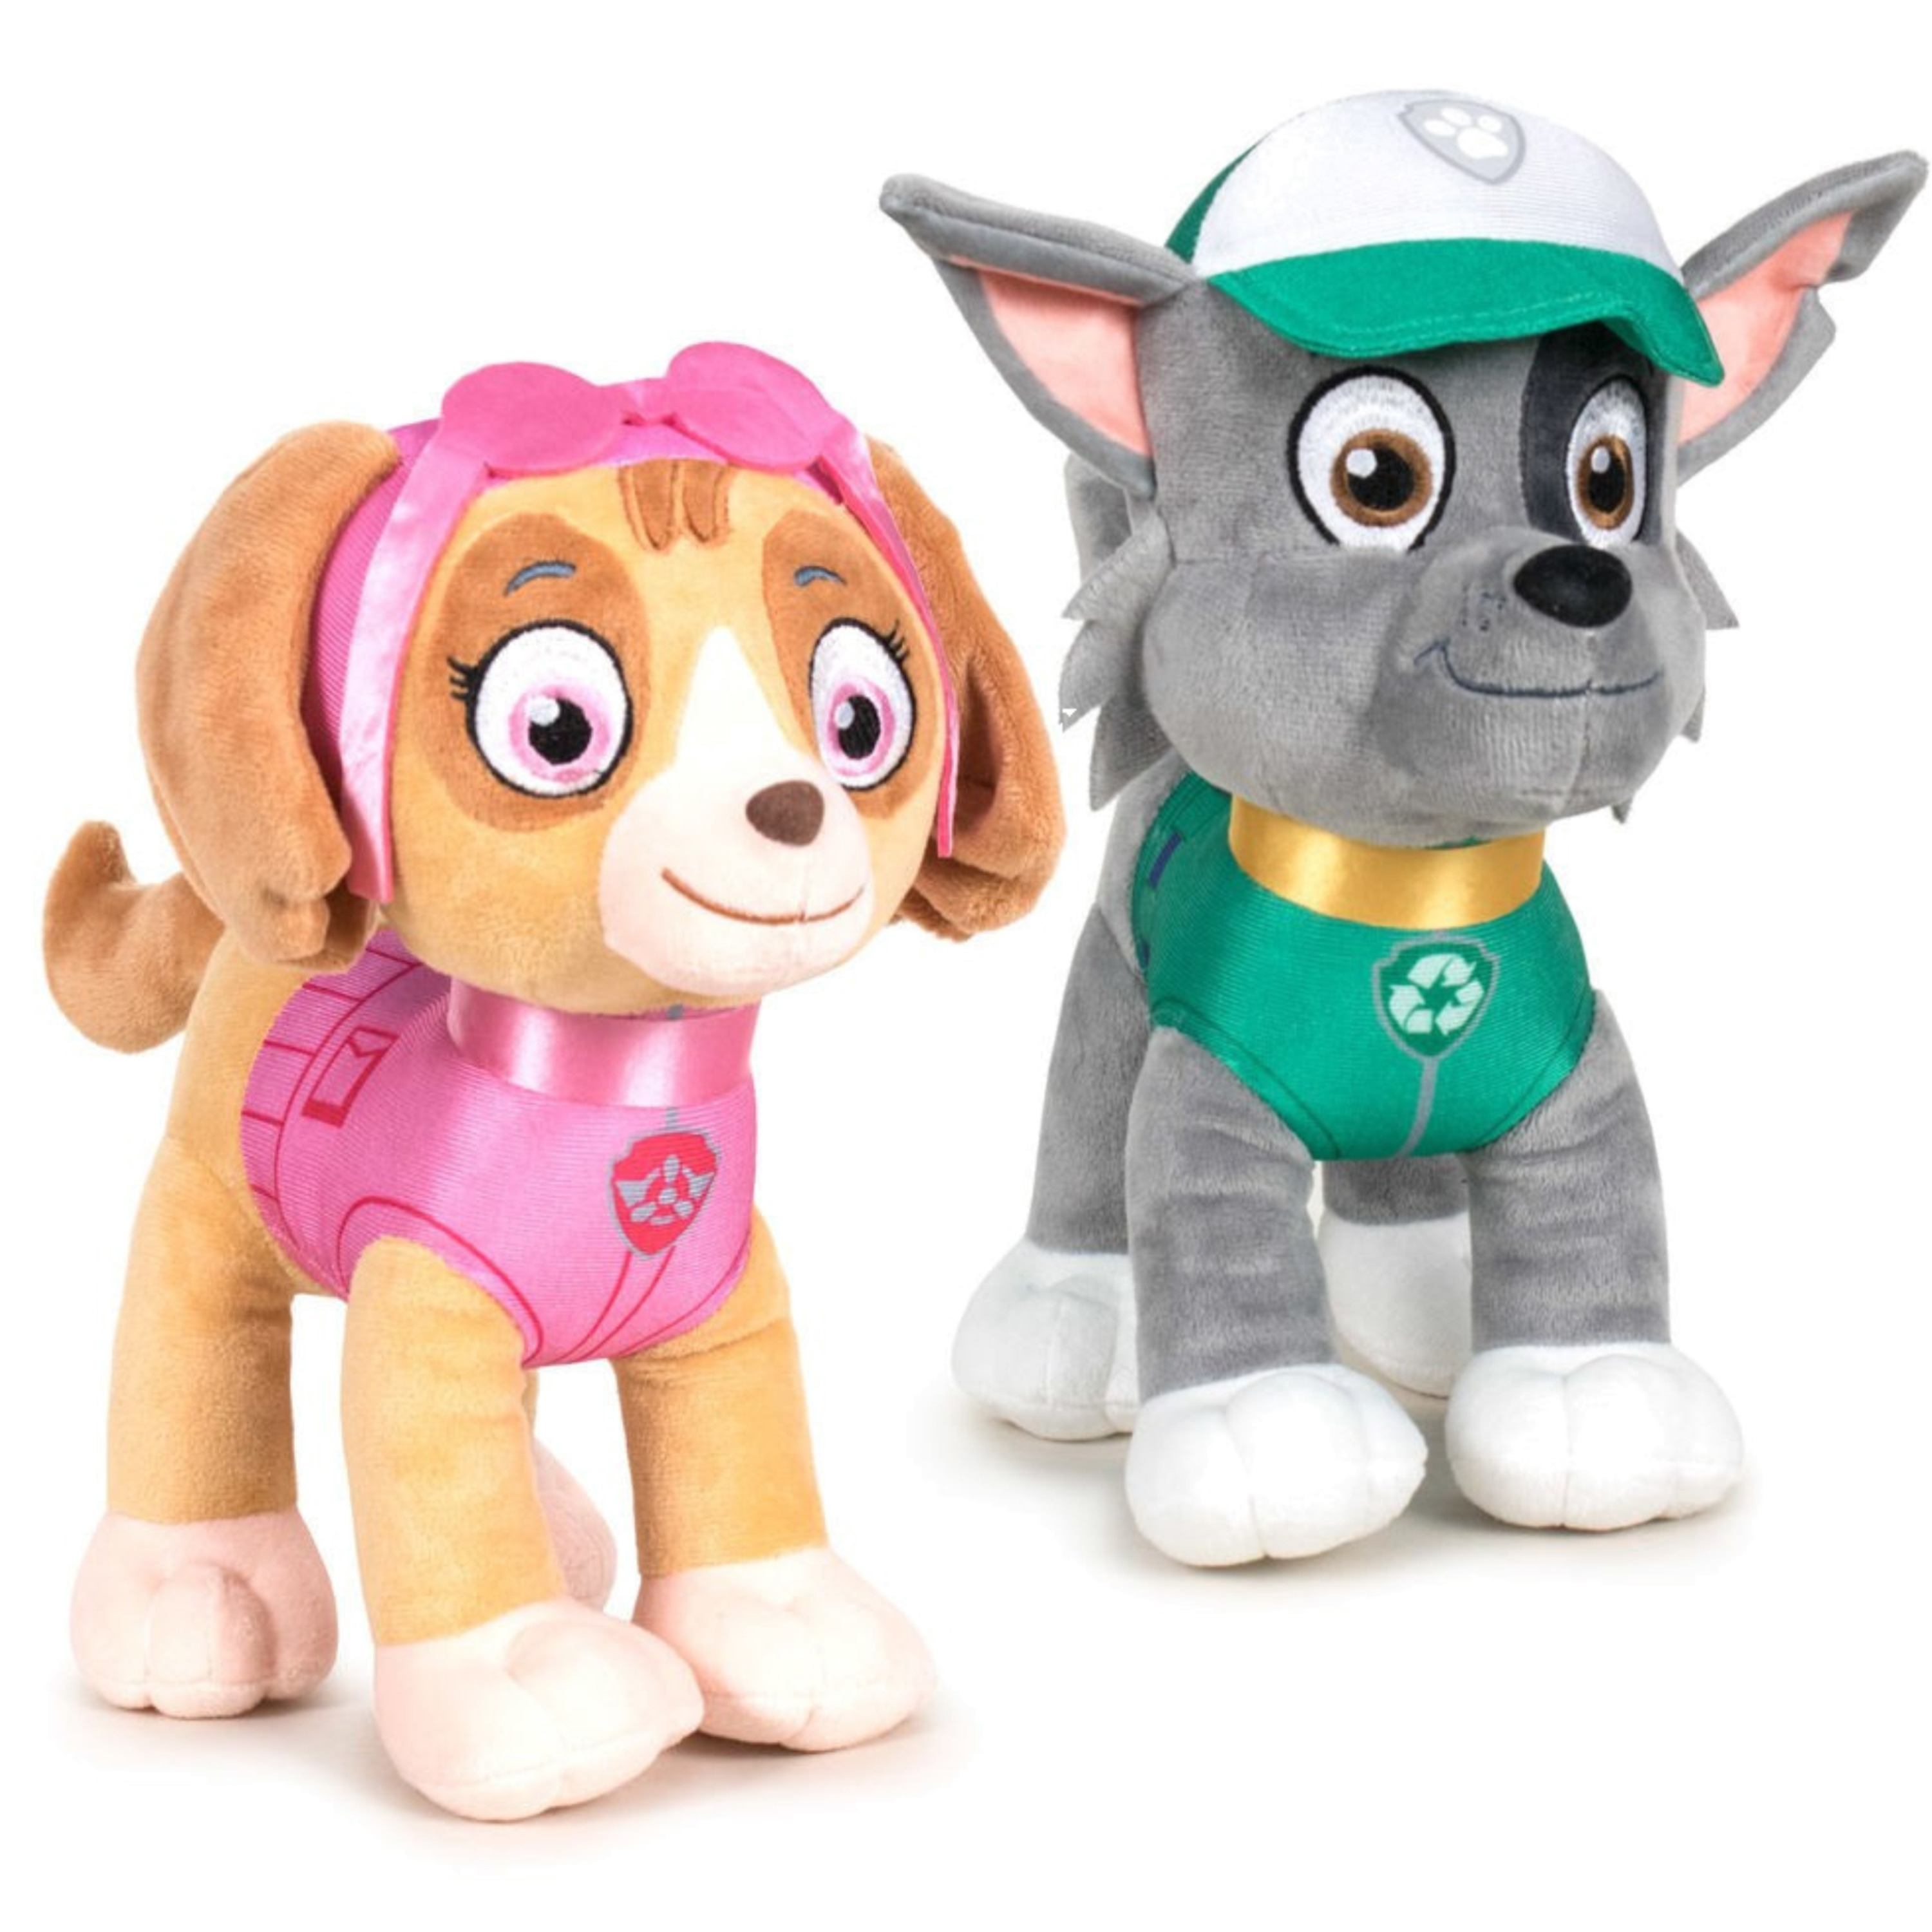 Paw Patrol figuren speelgoed knuffels set van 2x karakters Rocky en Skye 19 cm -